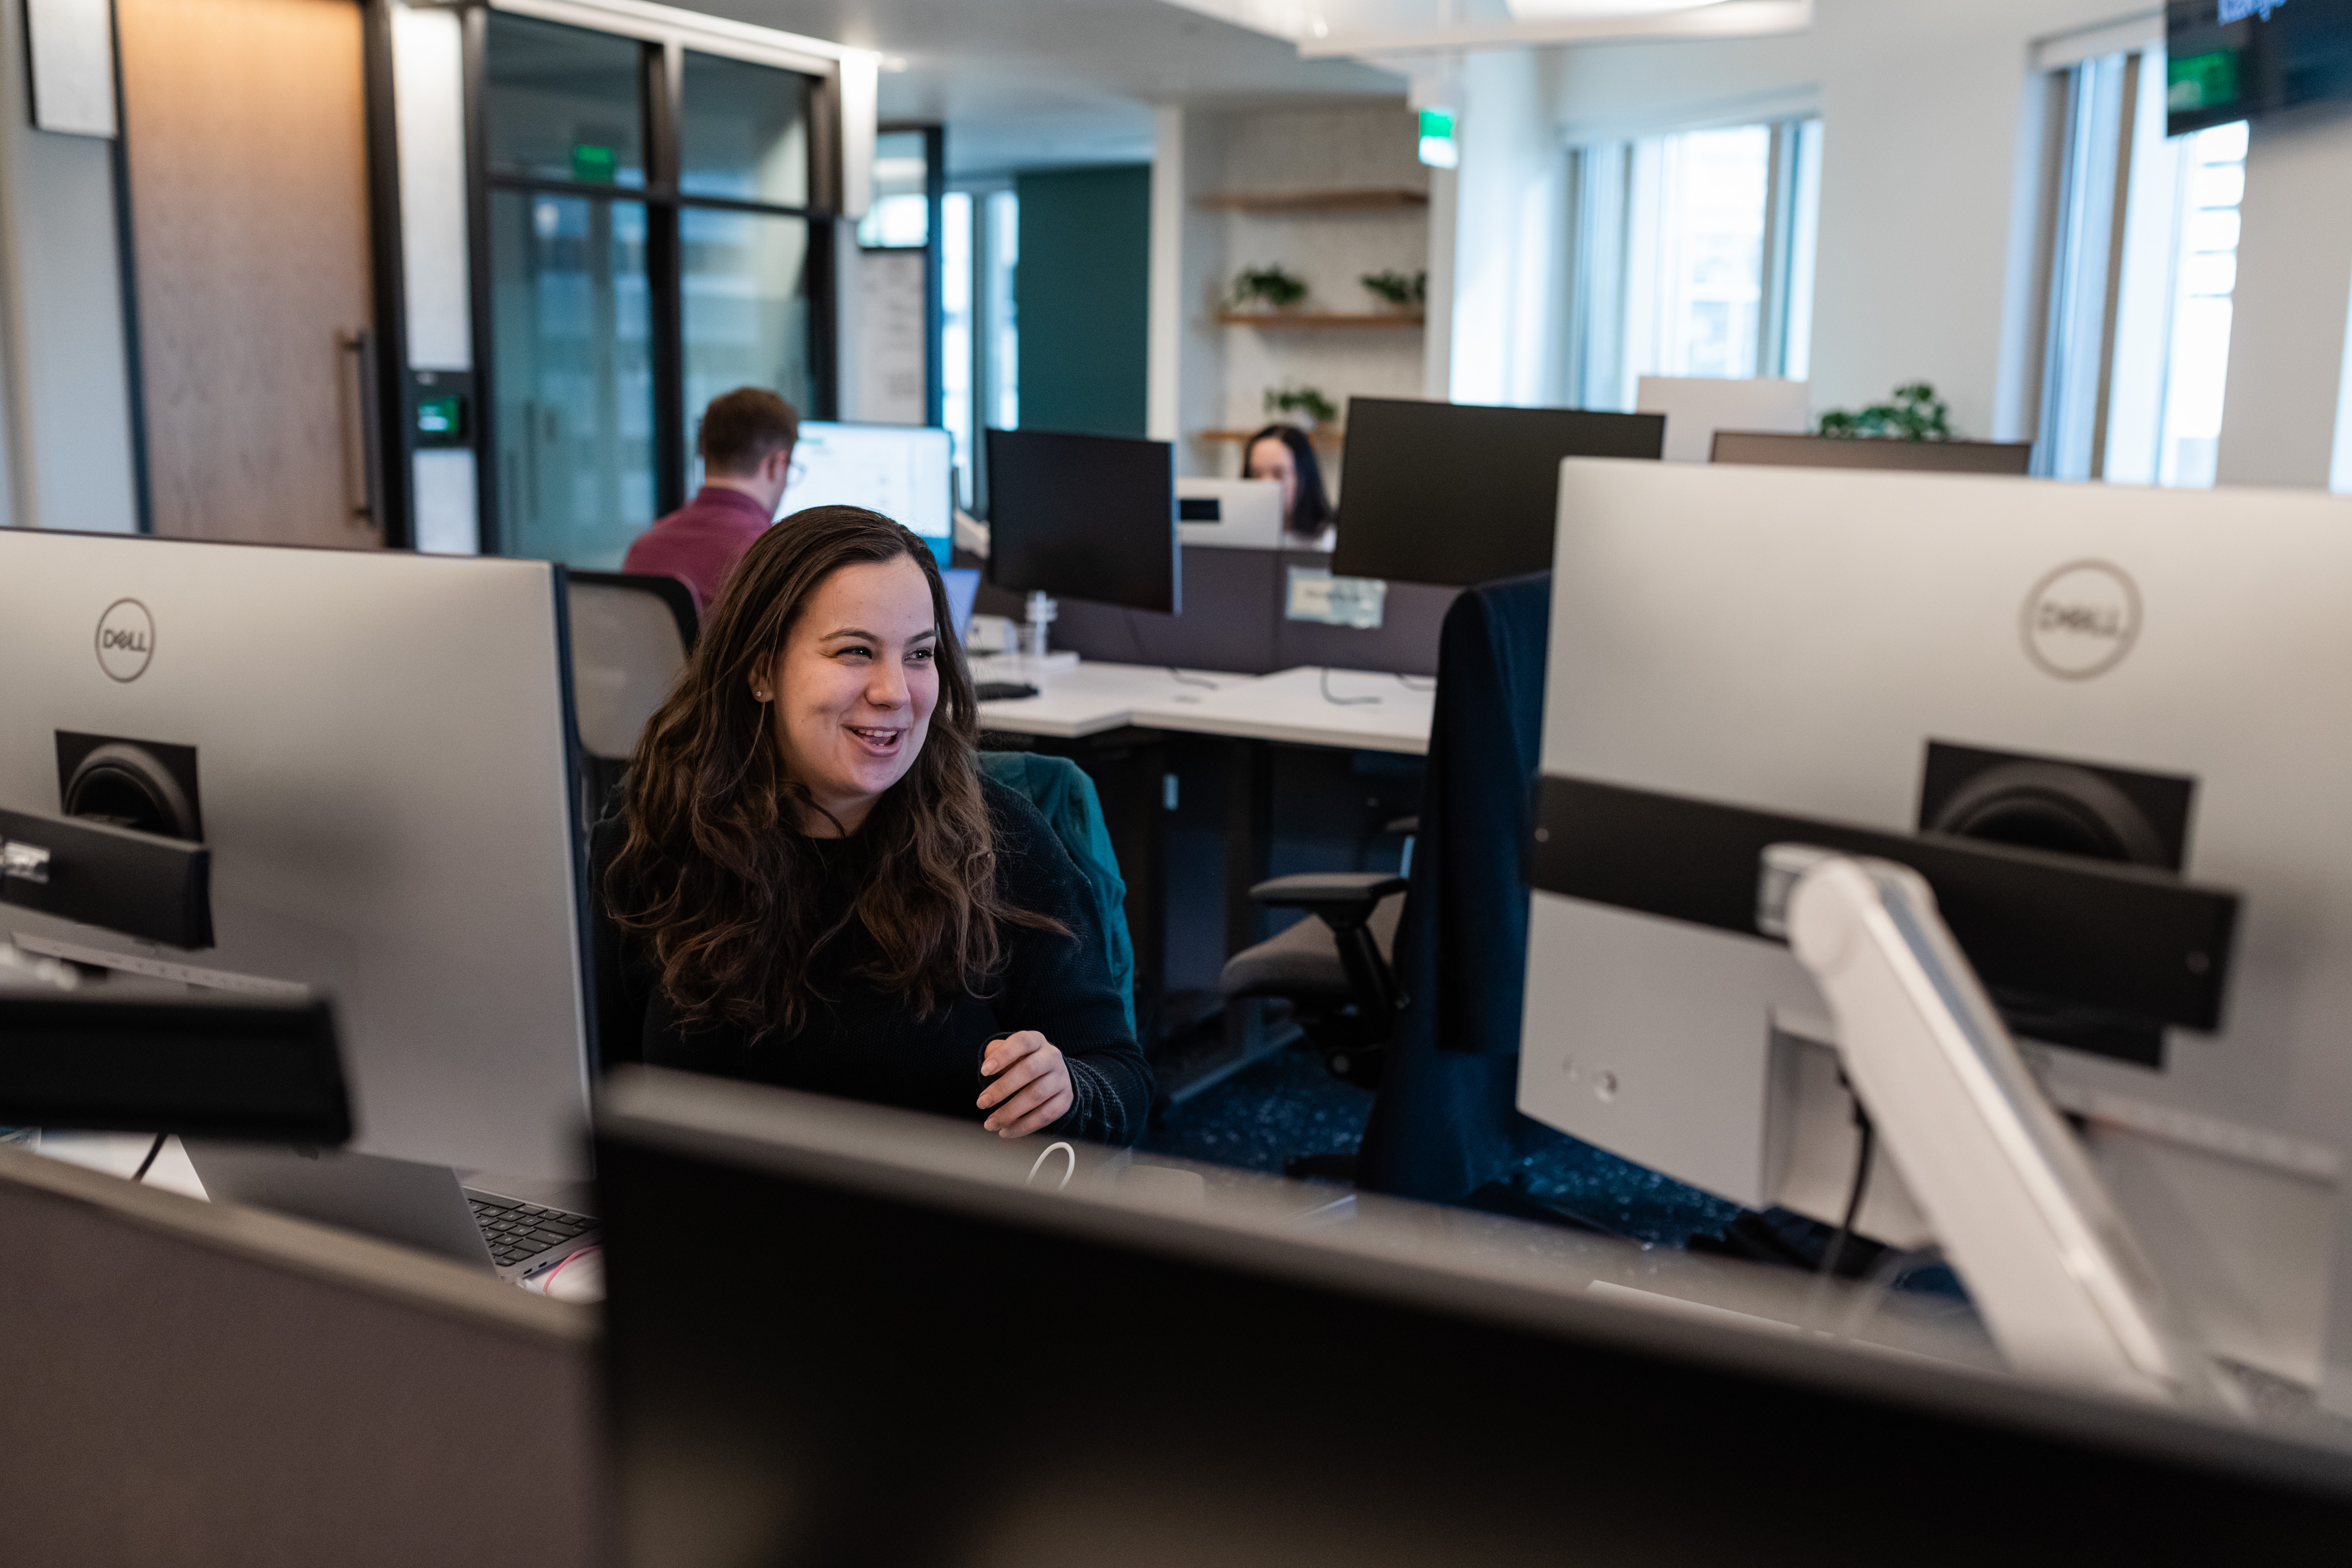 A team member works at their desk during a hackathon.